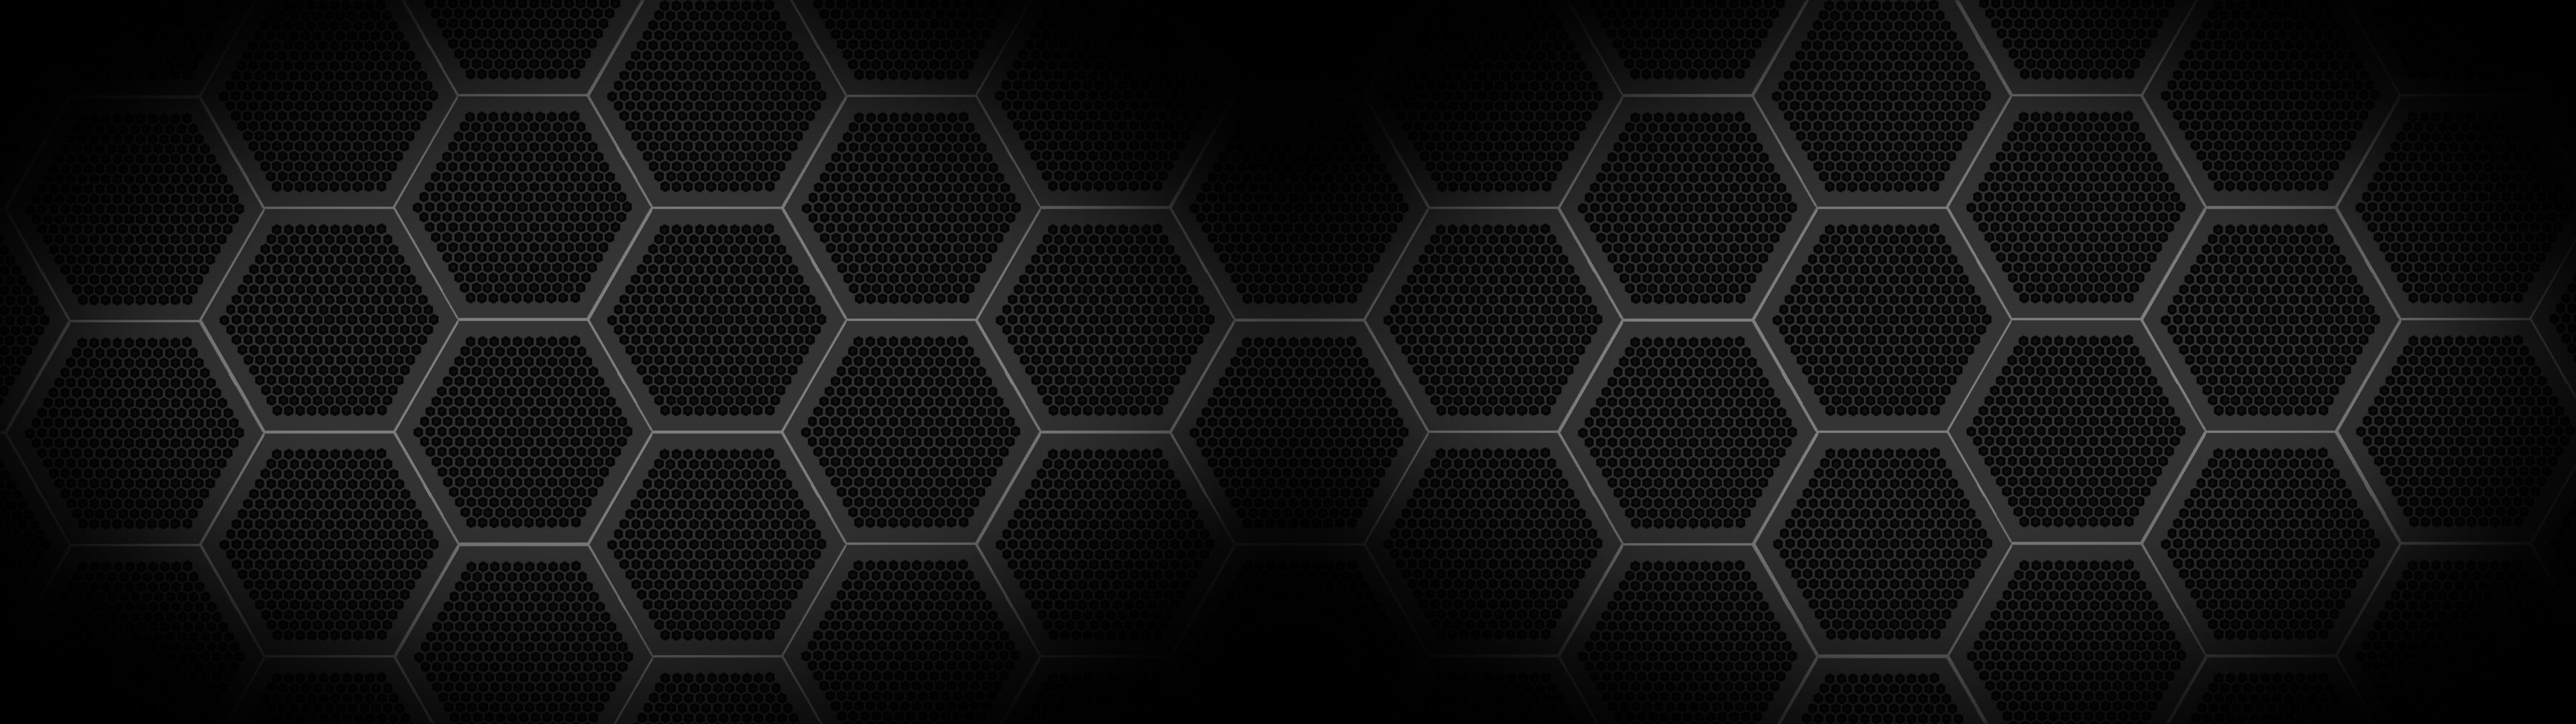 black and white honeycomb wallpaper, pattern, texture, digital art